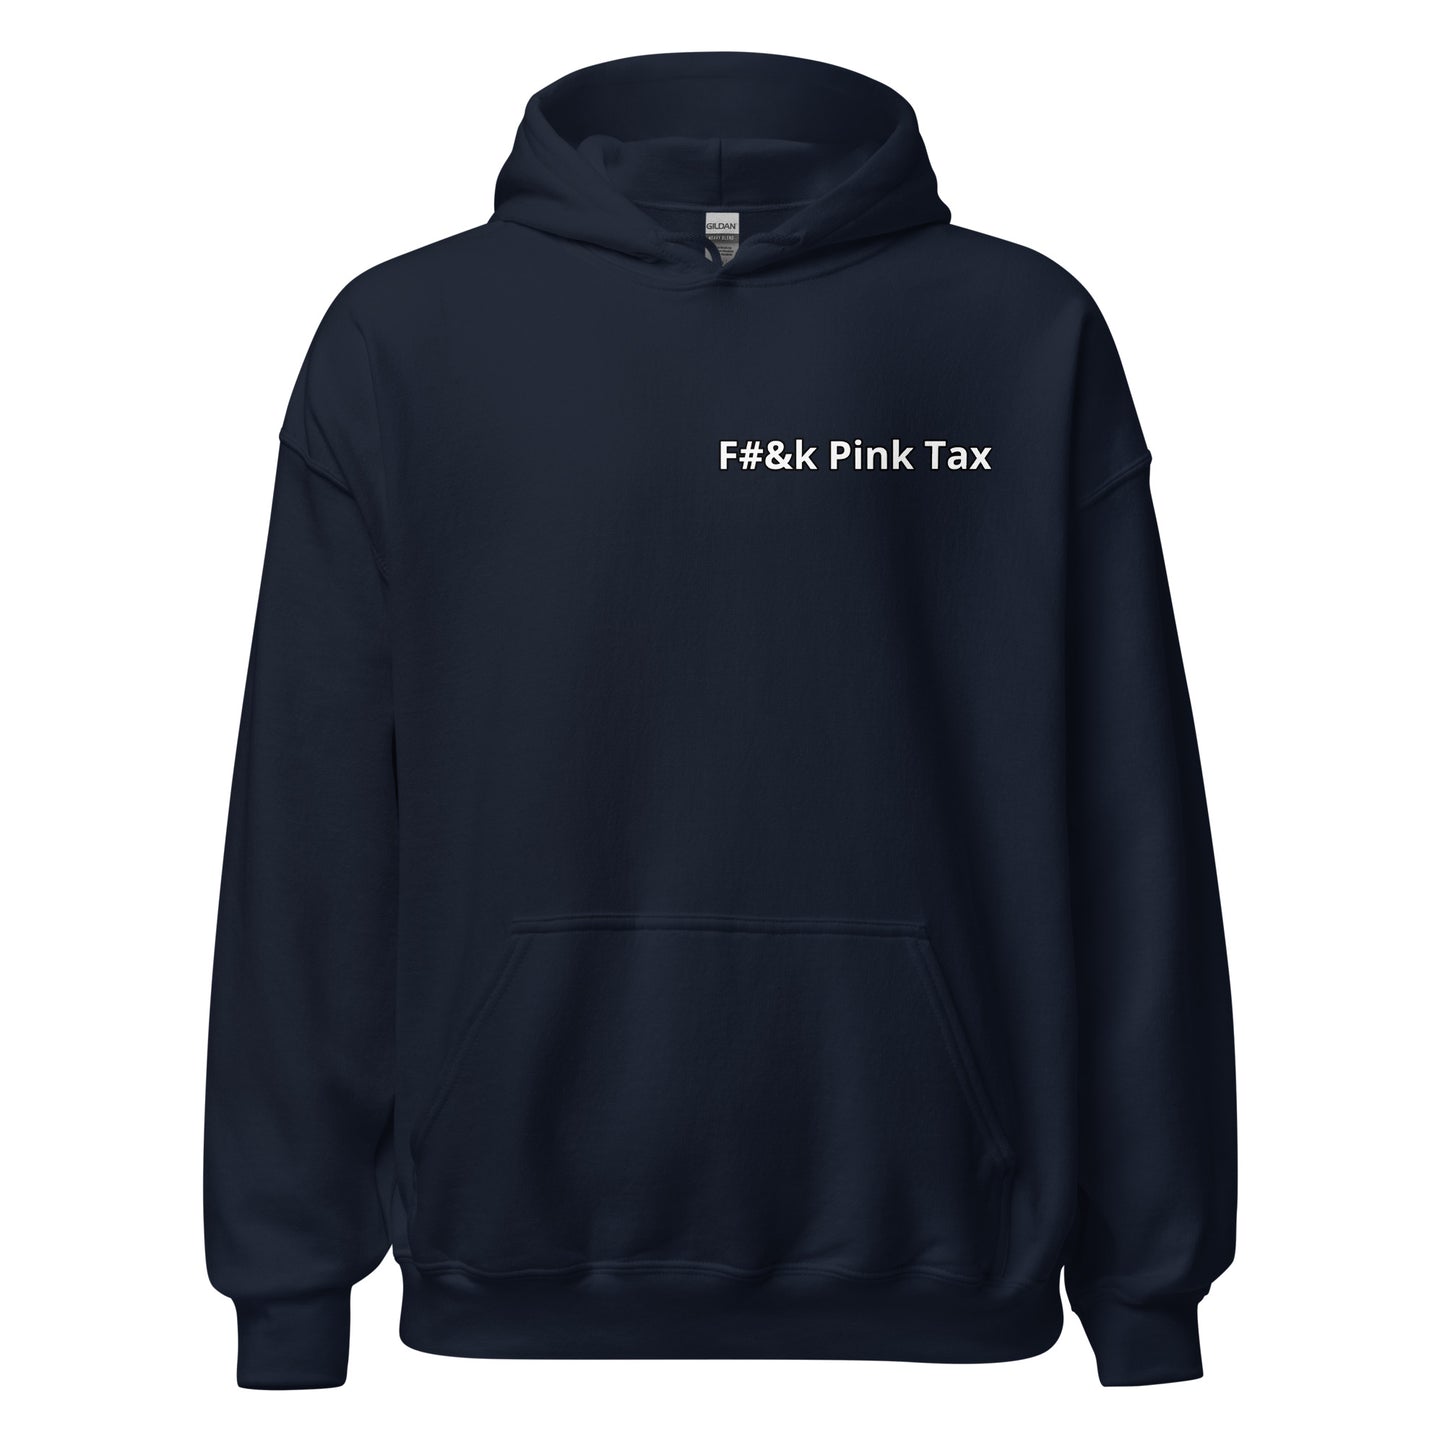 F#&k Pink Tax Hoodie